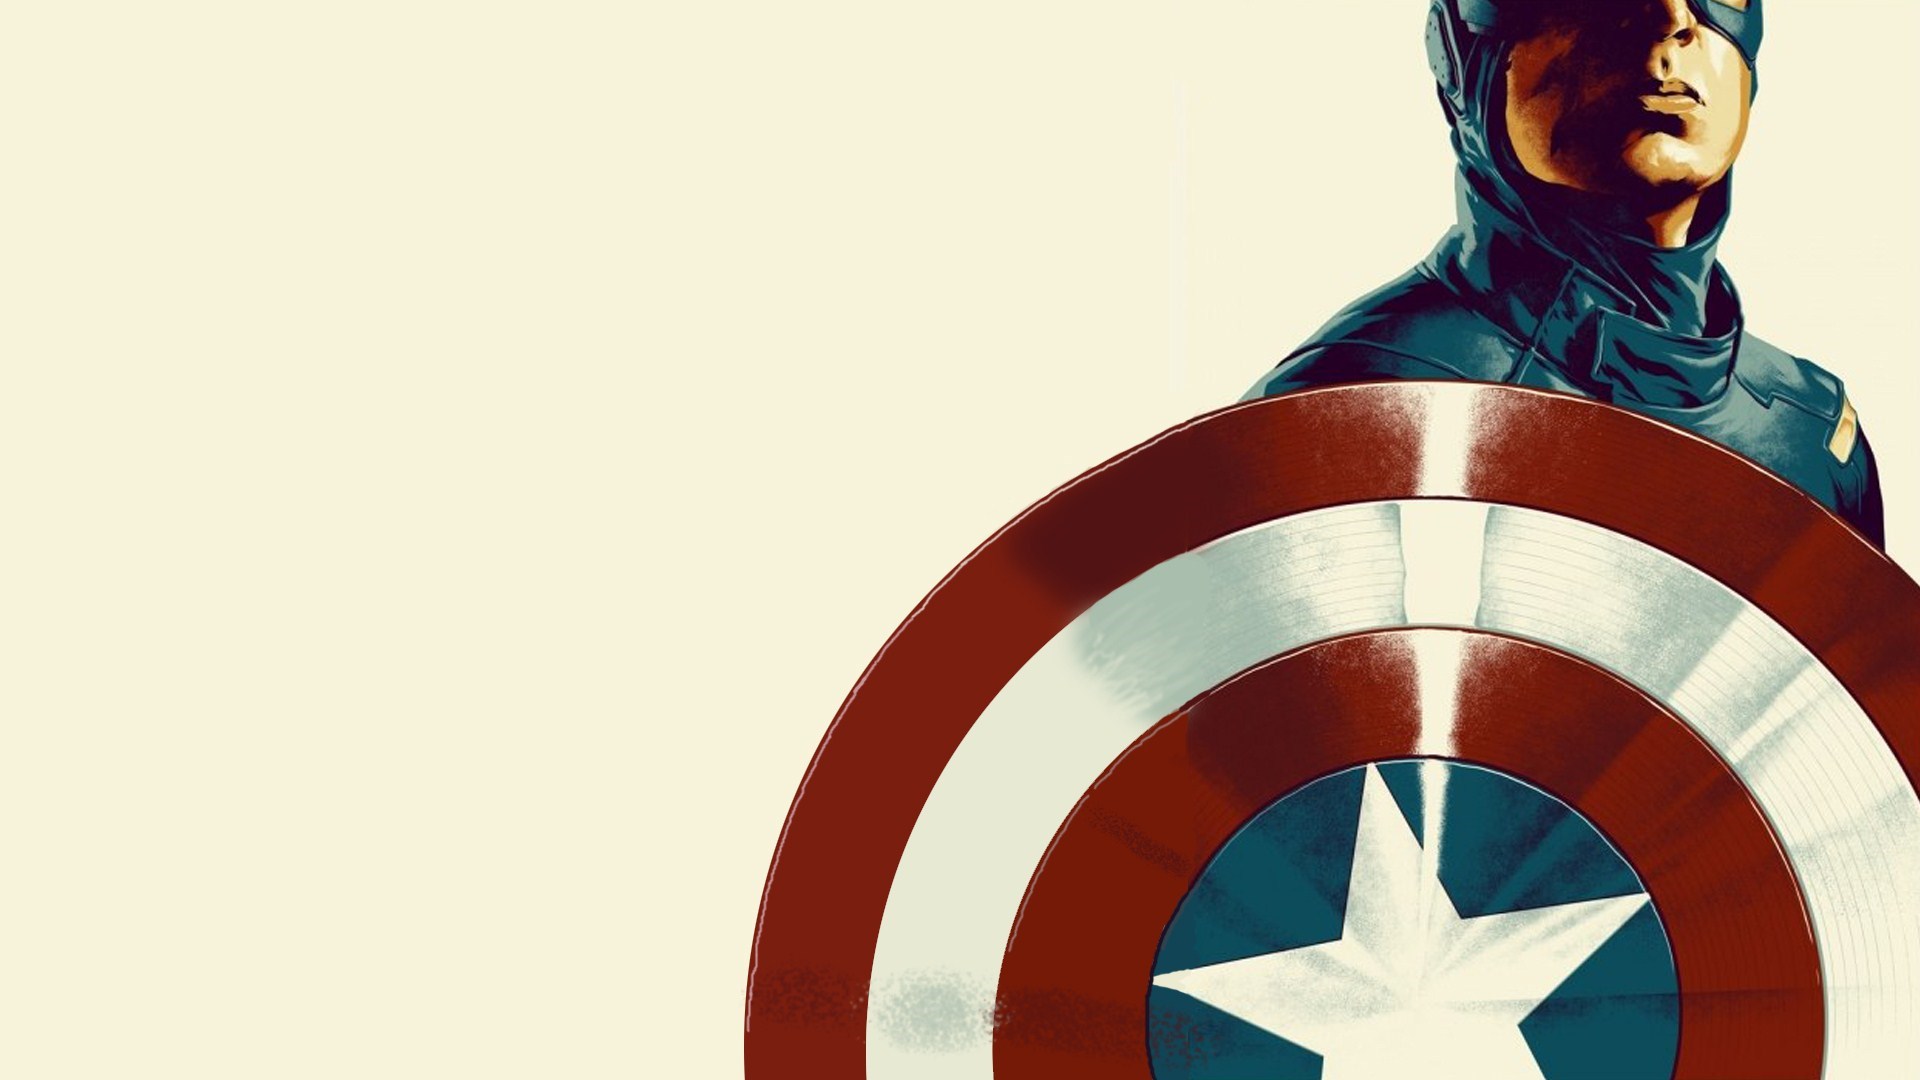 Captain America Art wallpaper 1920x1080 9100